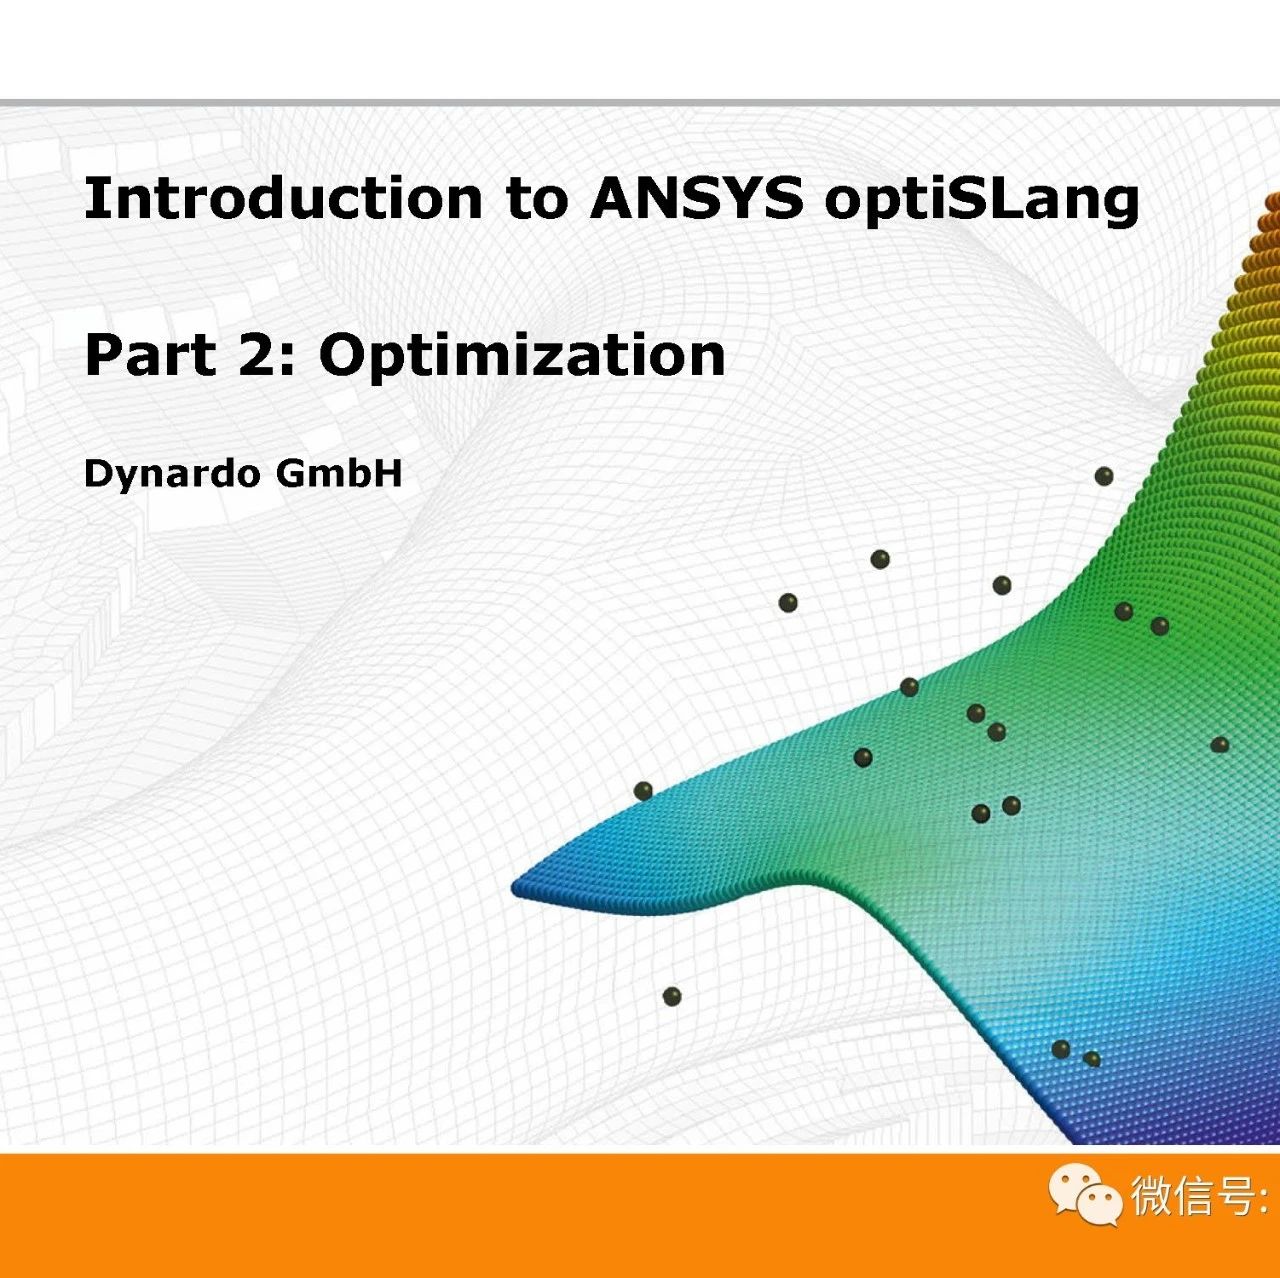 ANSYS optiSlang: optimization